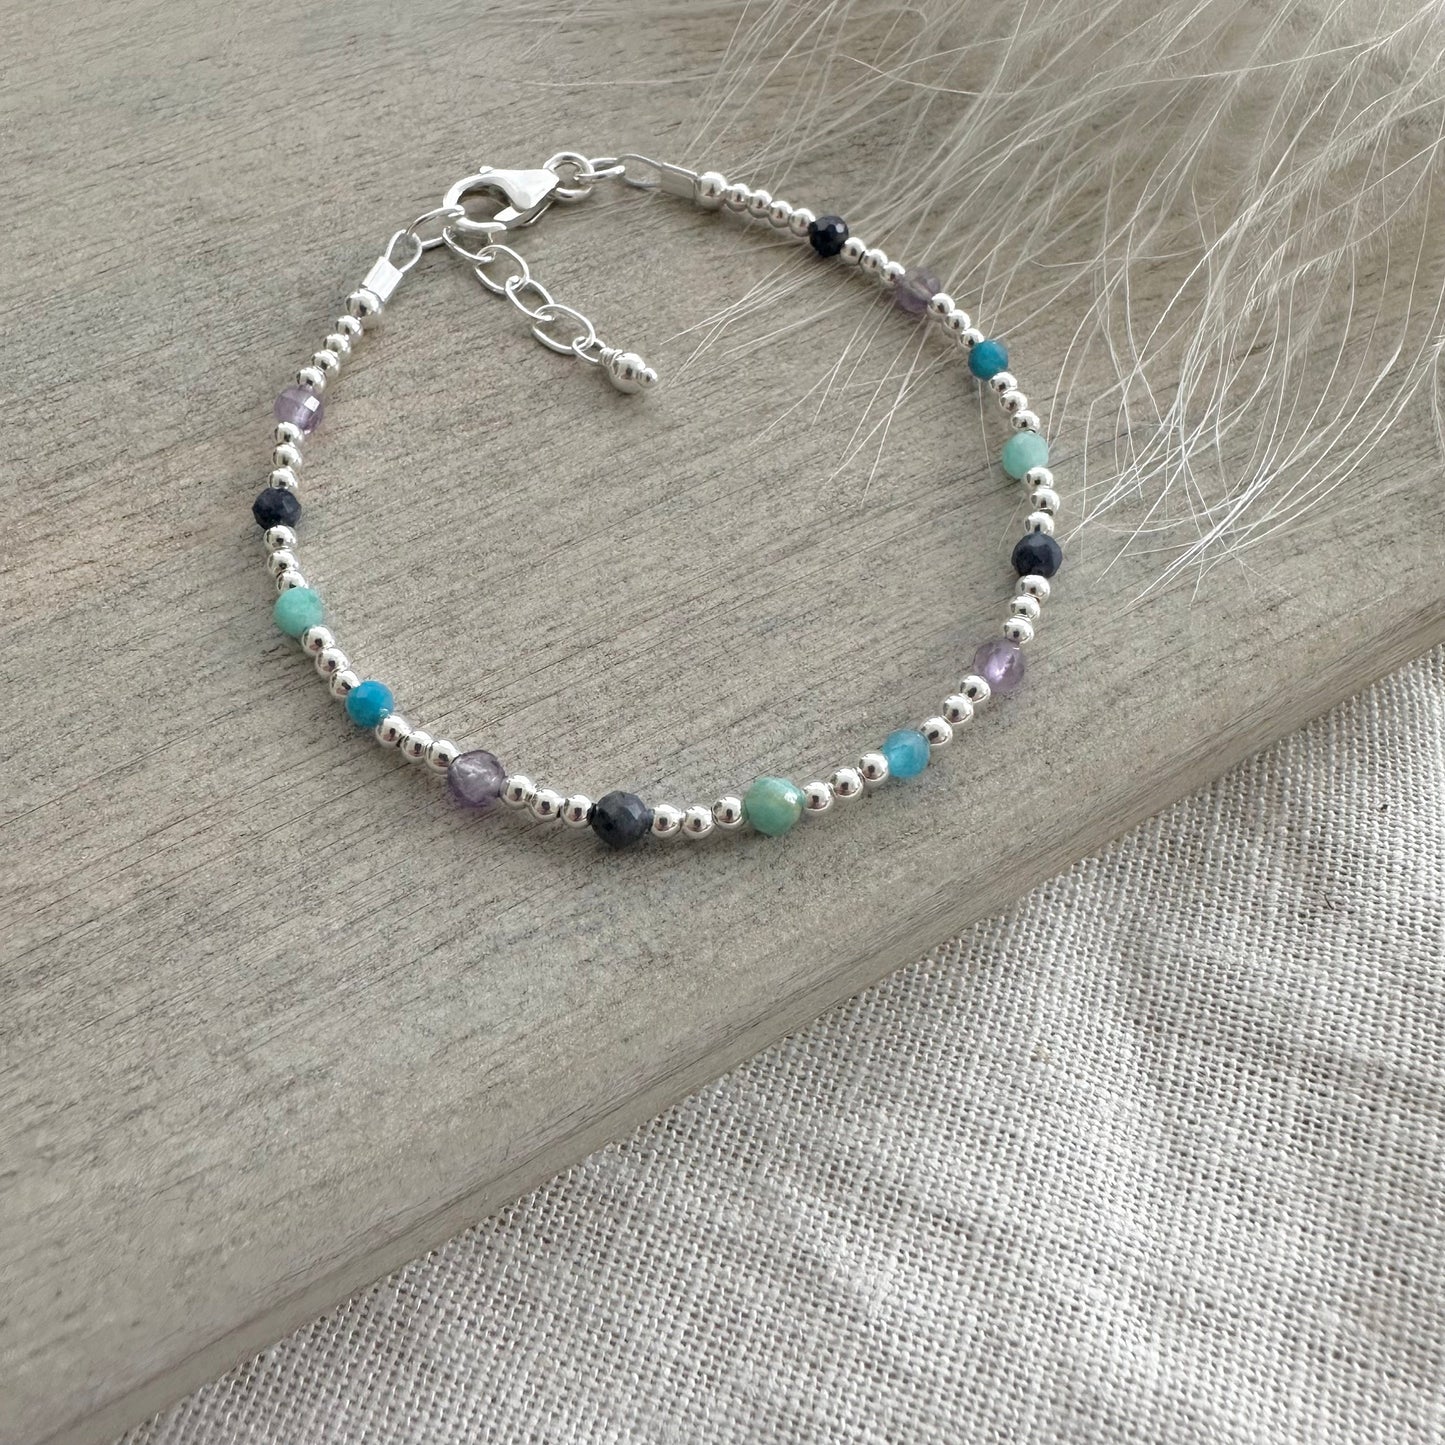 Gemstone bracelet for summer with dainty gemstones and sterling silver, colourful bracelet for summer holidays